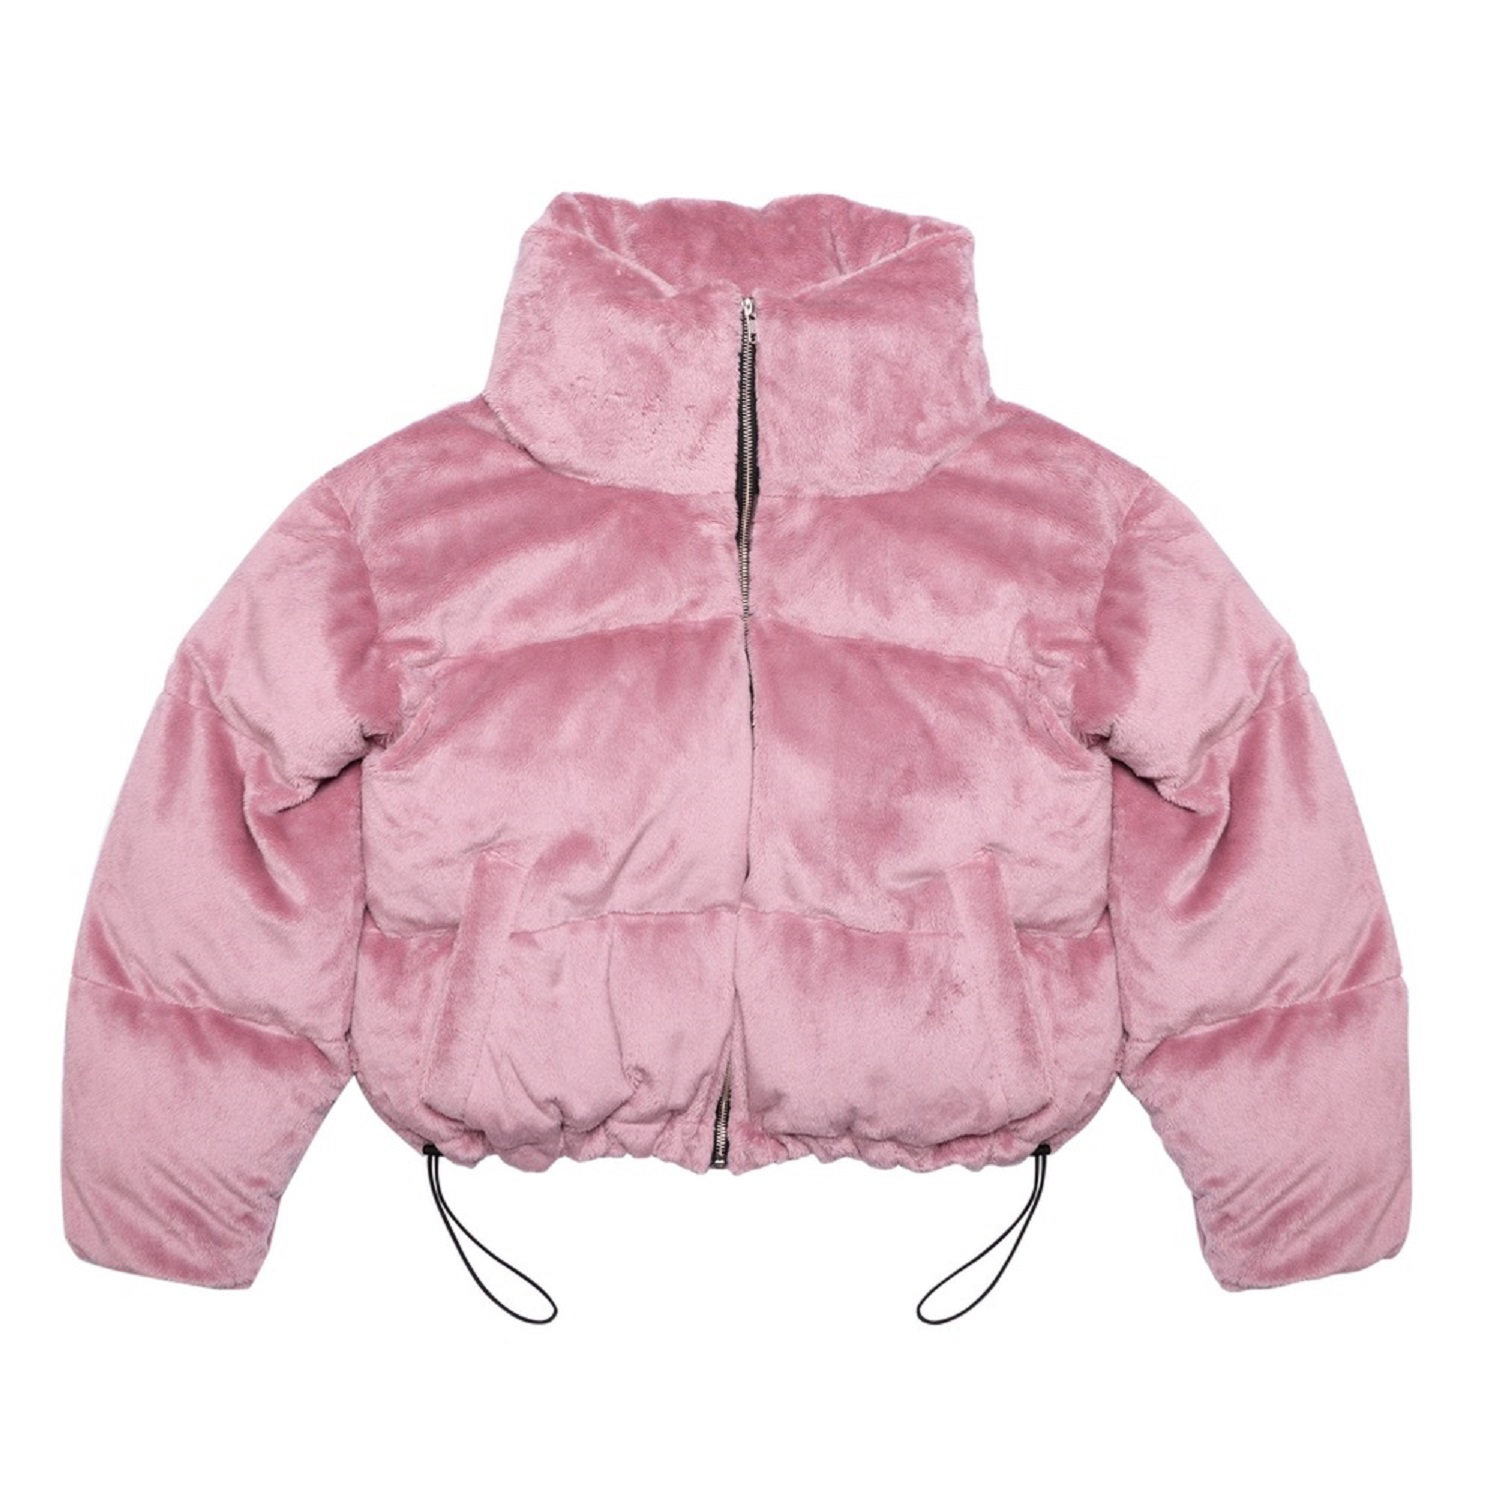 HMBD's Fluffly Jacket Provides Winter Fashion Perfection